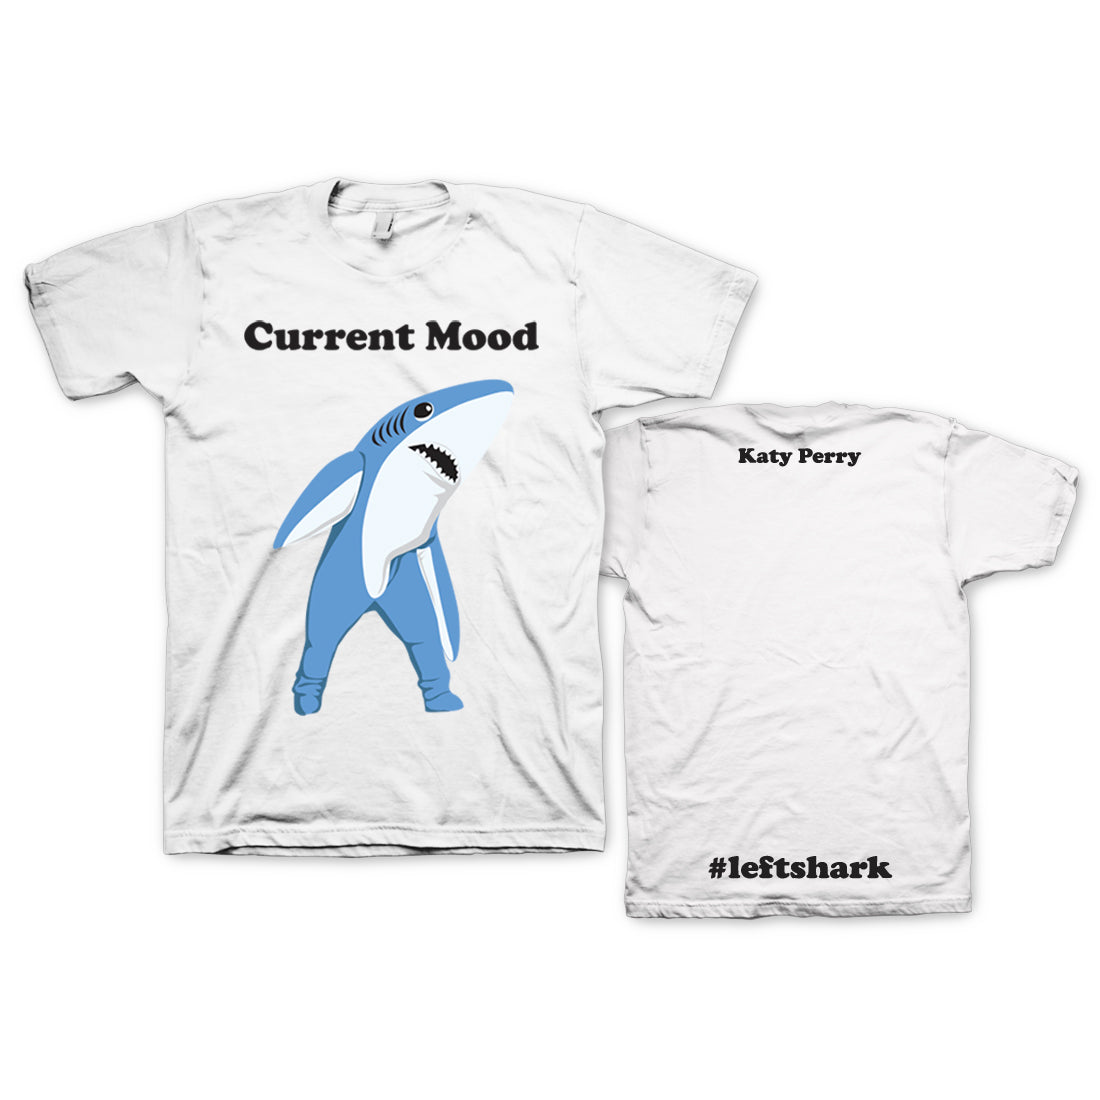 Katy Perry - Current Mood Shark T-shirt.